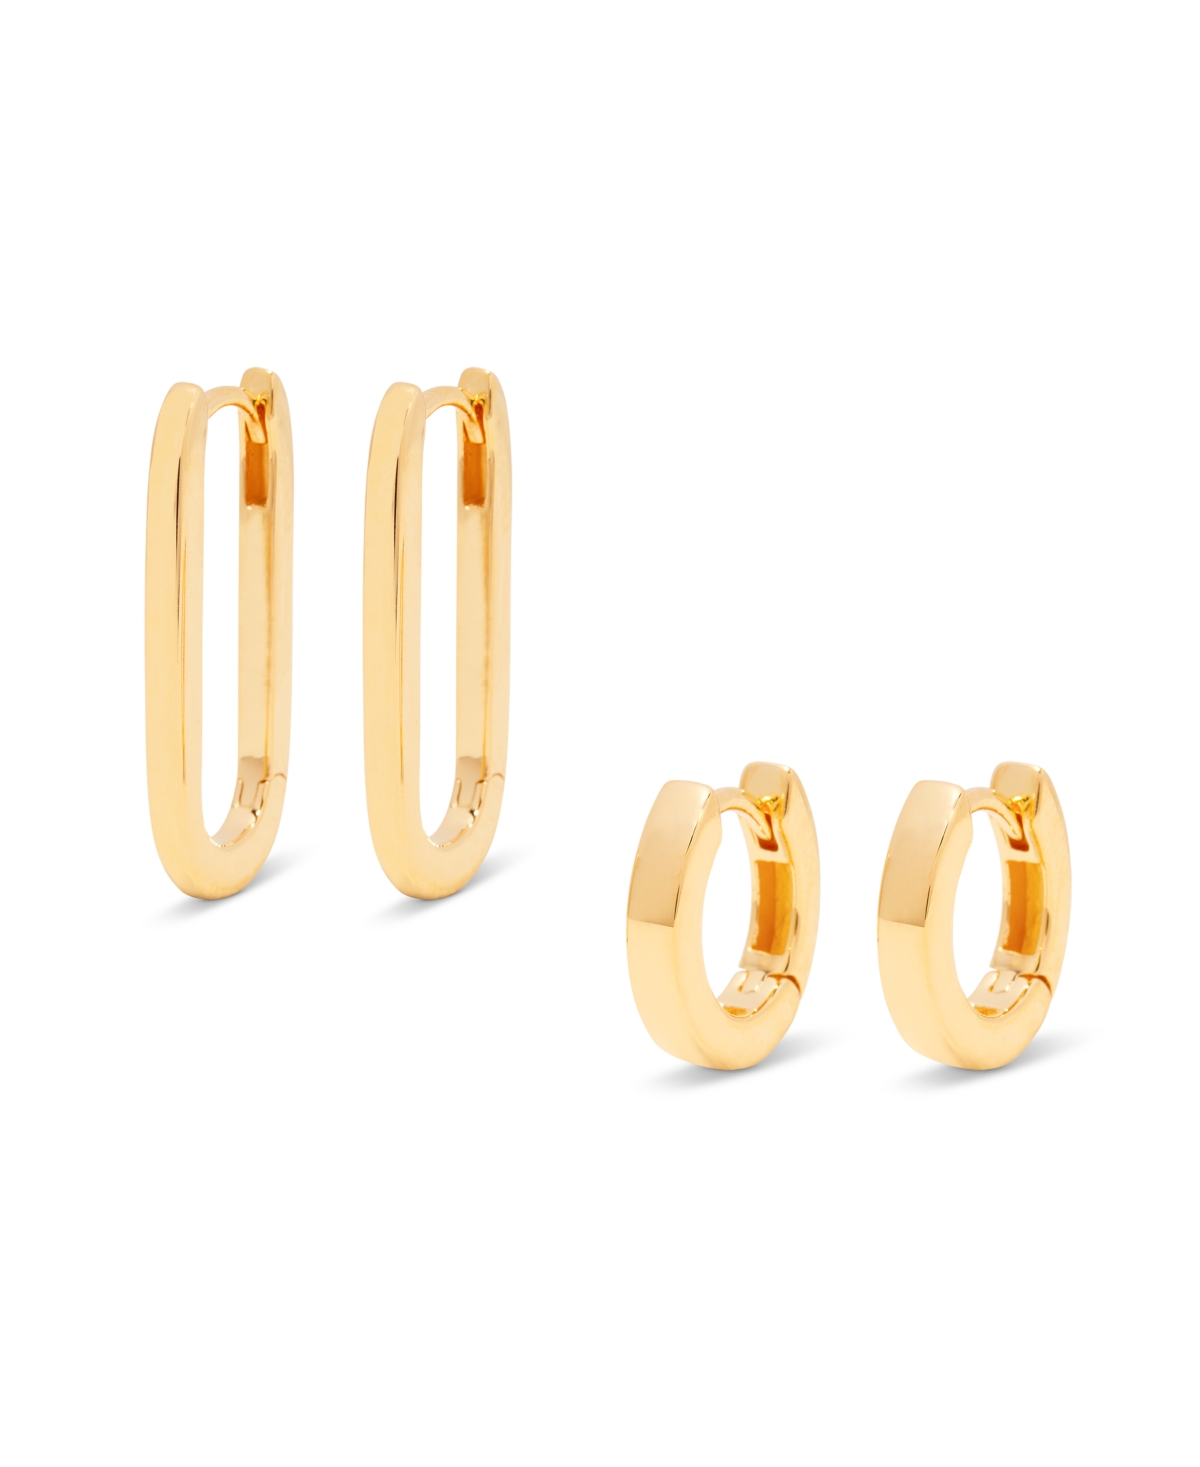 "14k Gold" Abigale Earring Set, 4 Piece - Gold Vermeil